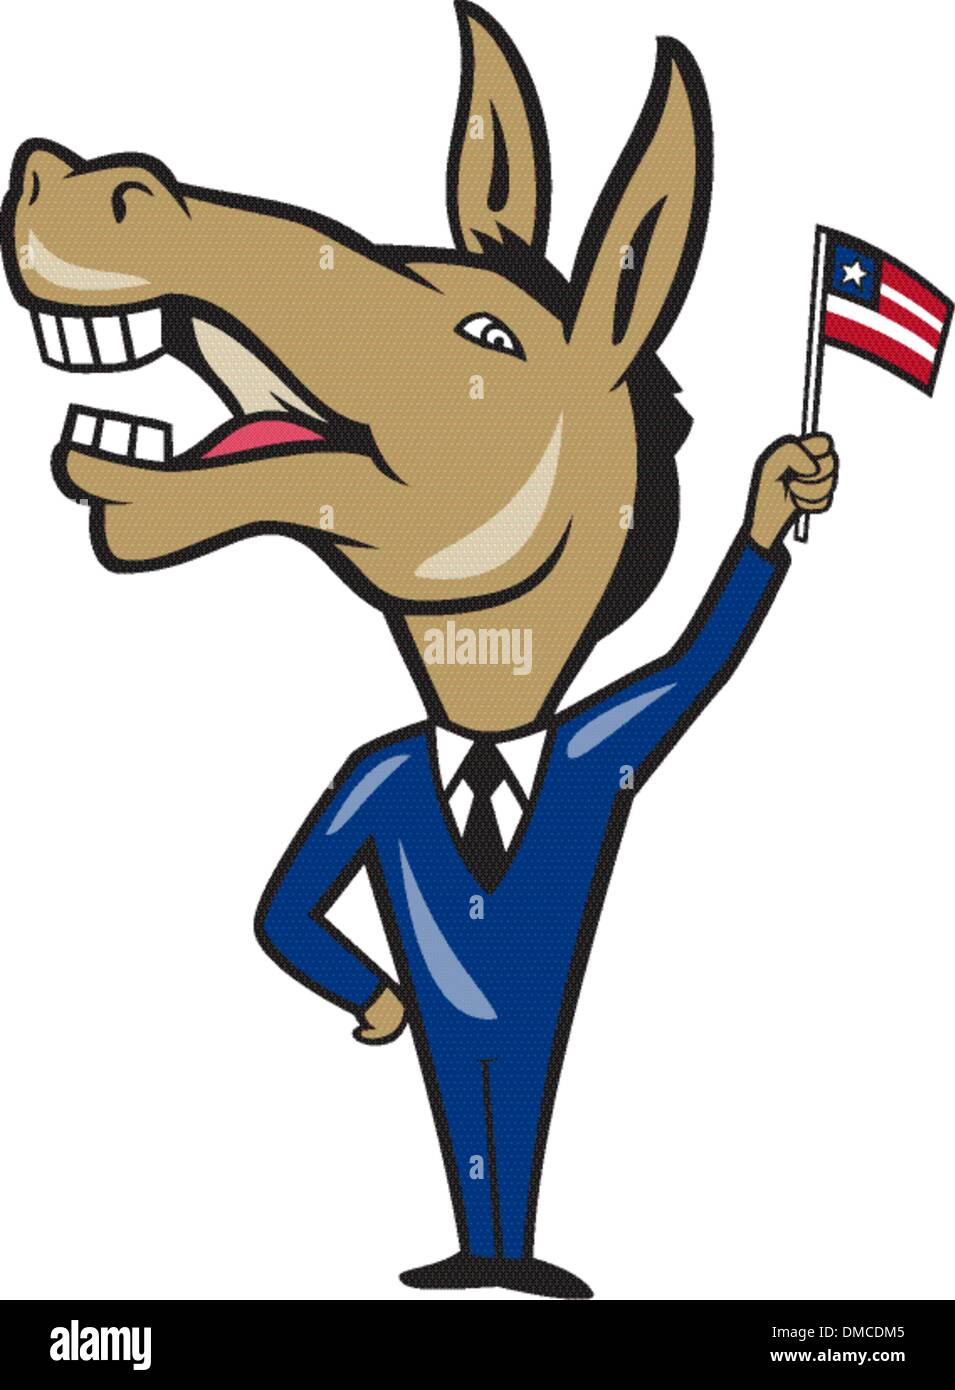 Democrat Donkey Mascot American Flag Stock Vector